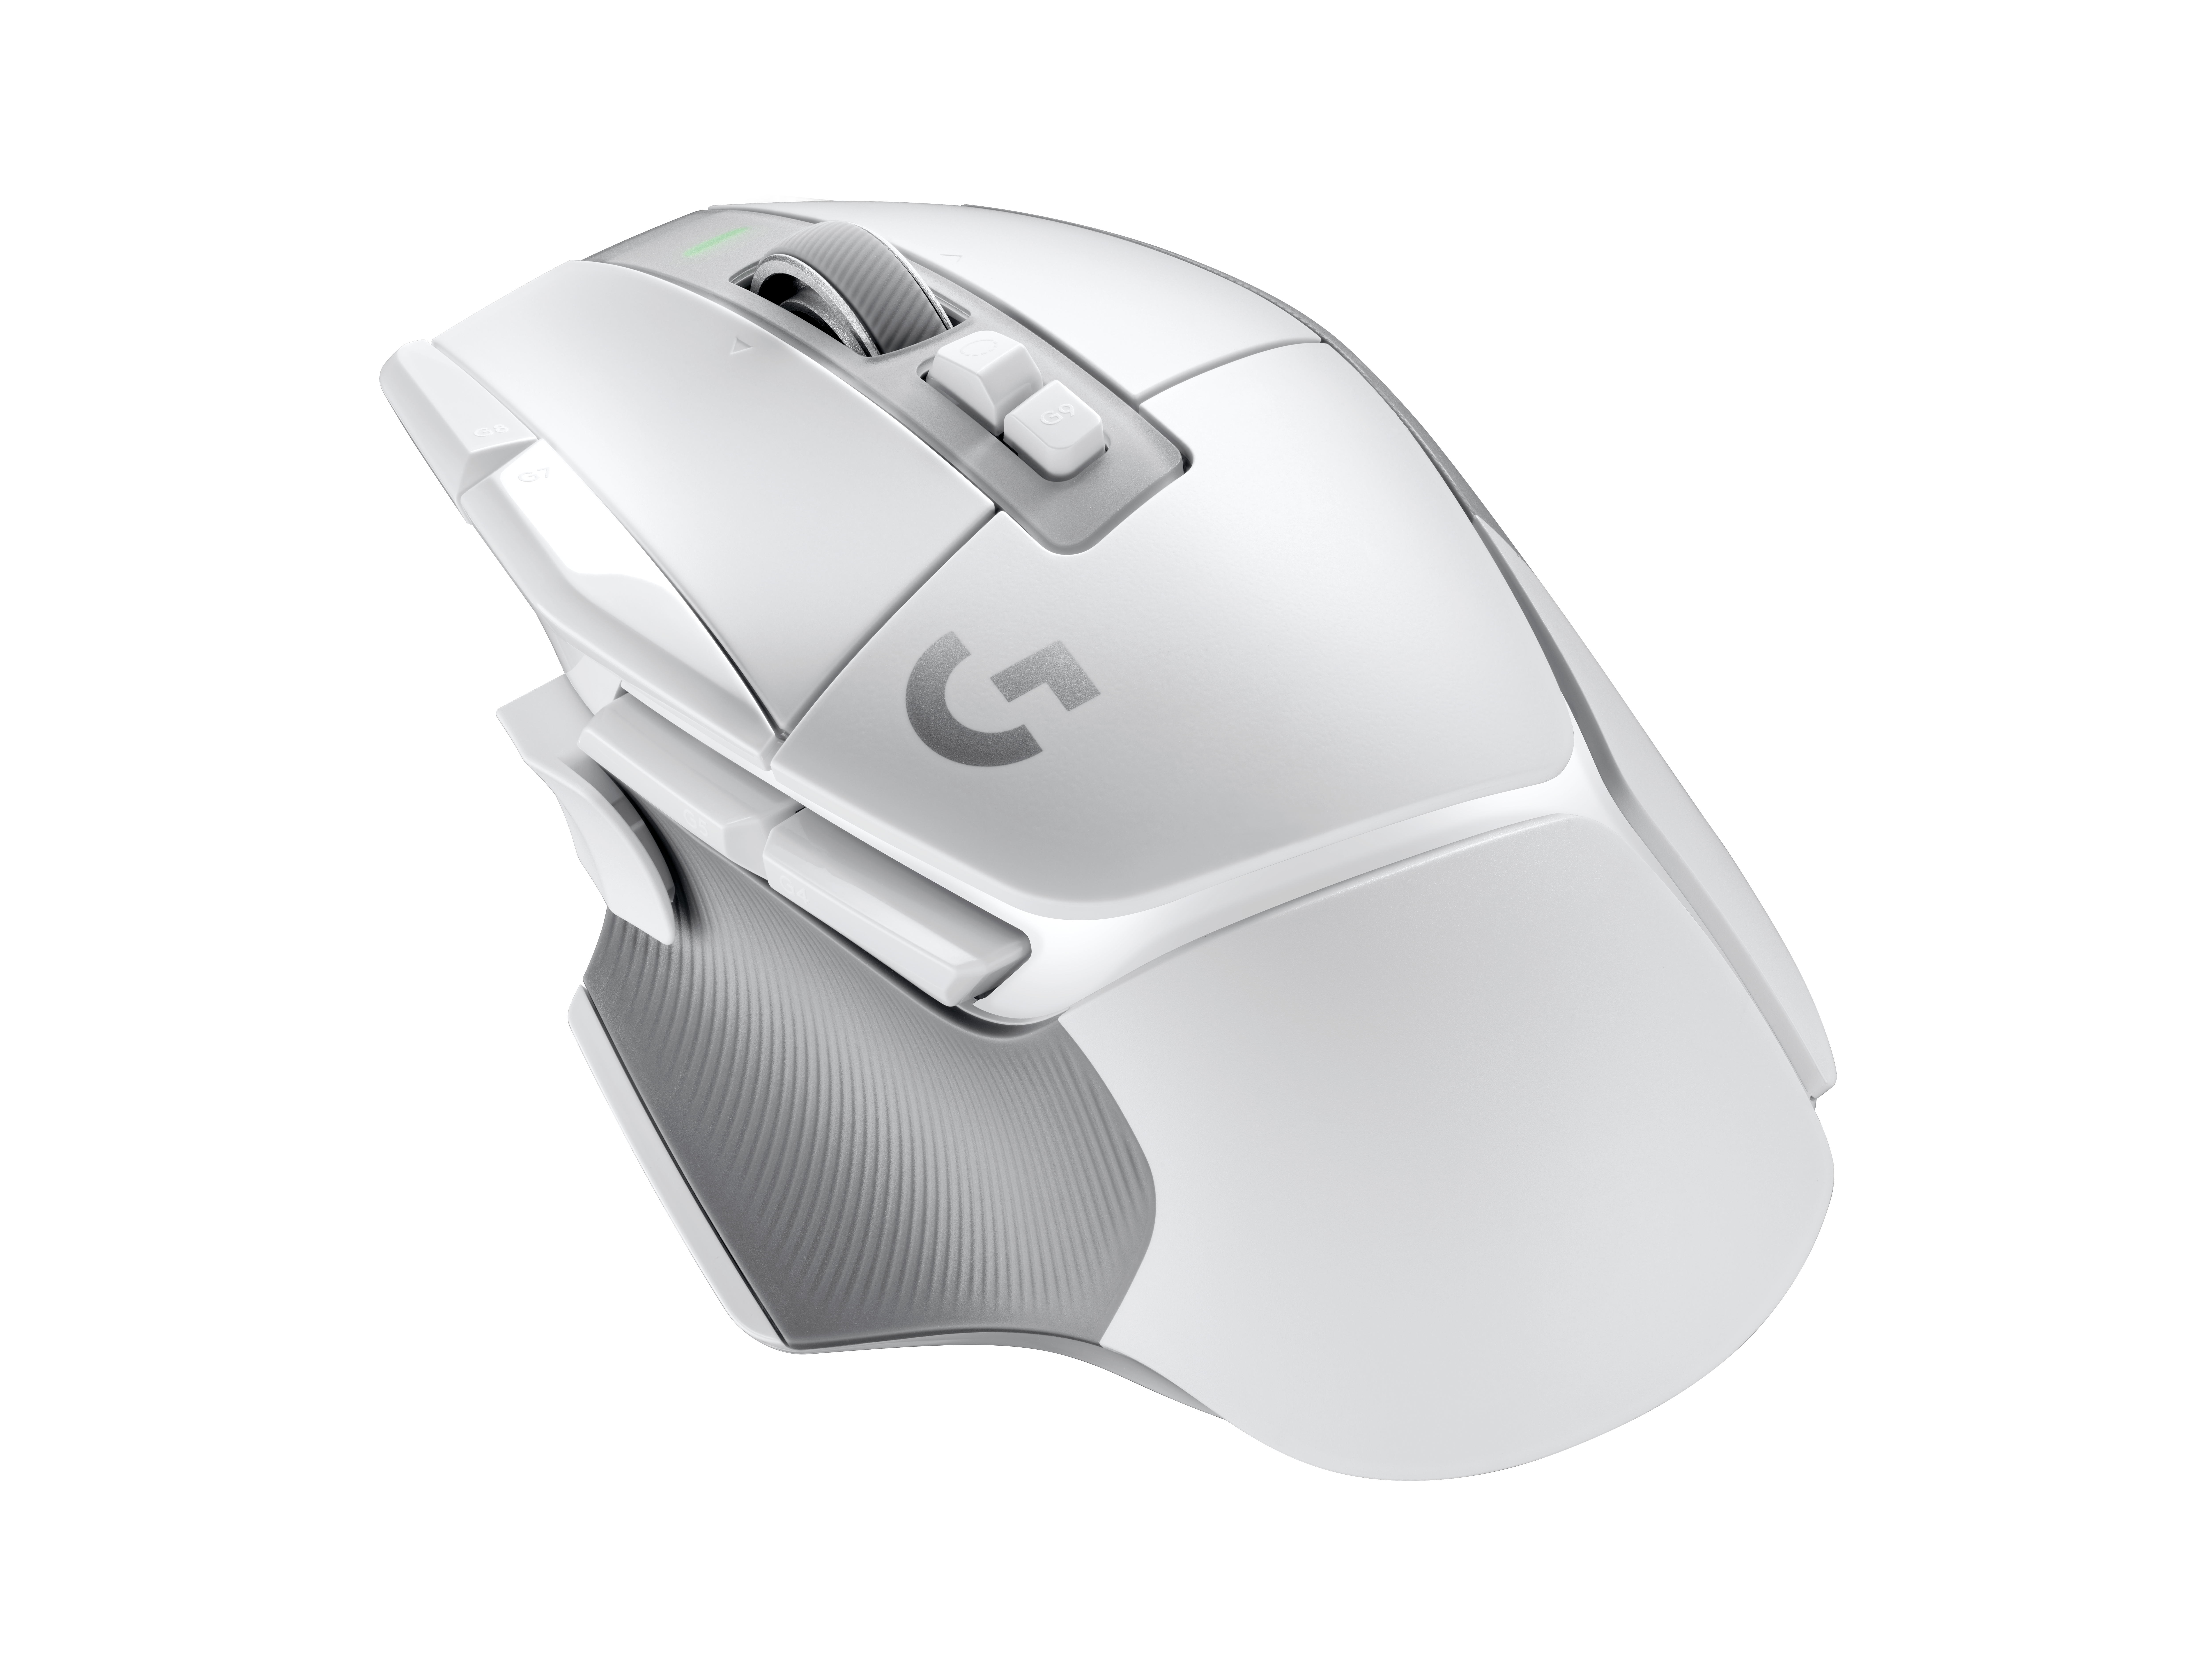 Logitech presenta el ratón gaming G502 X